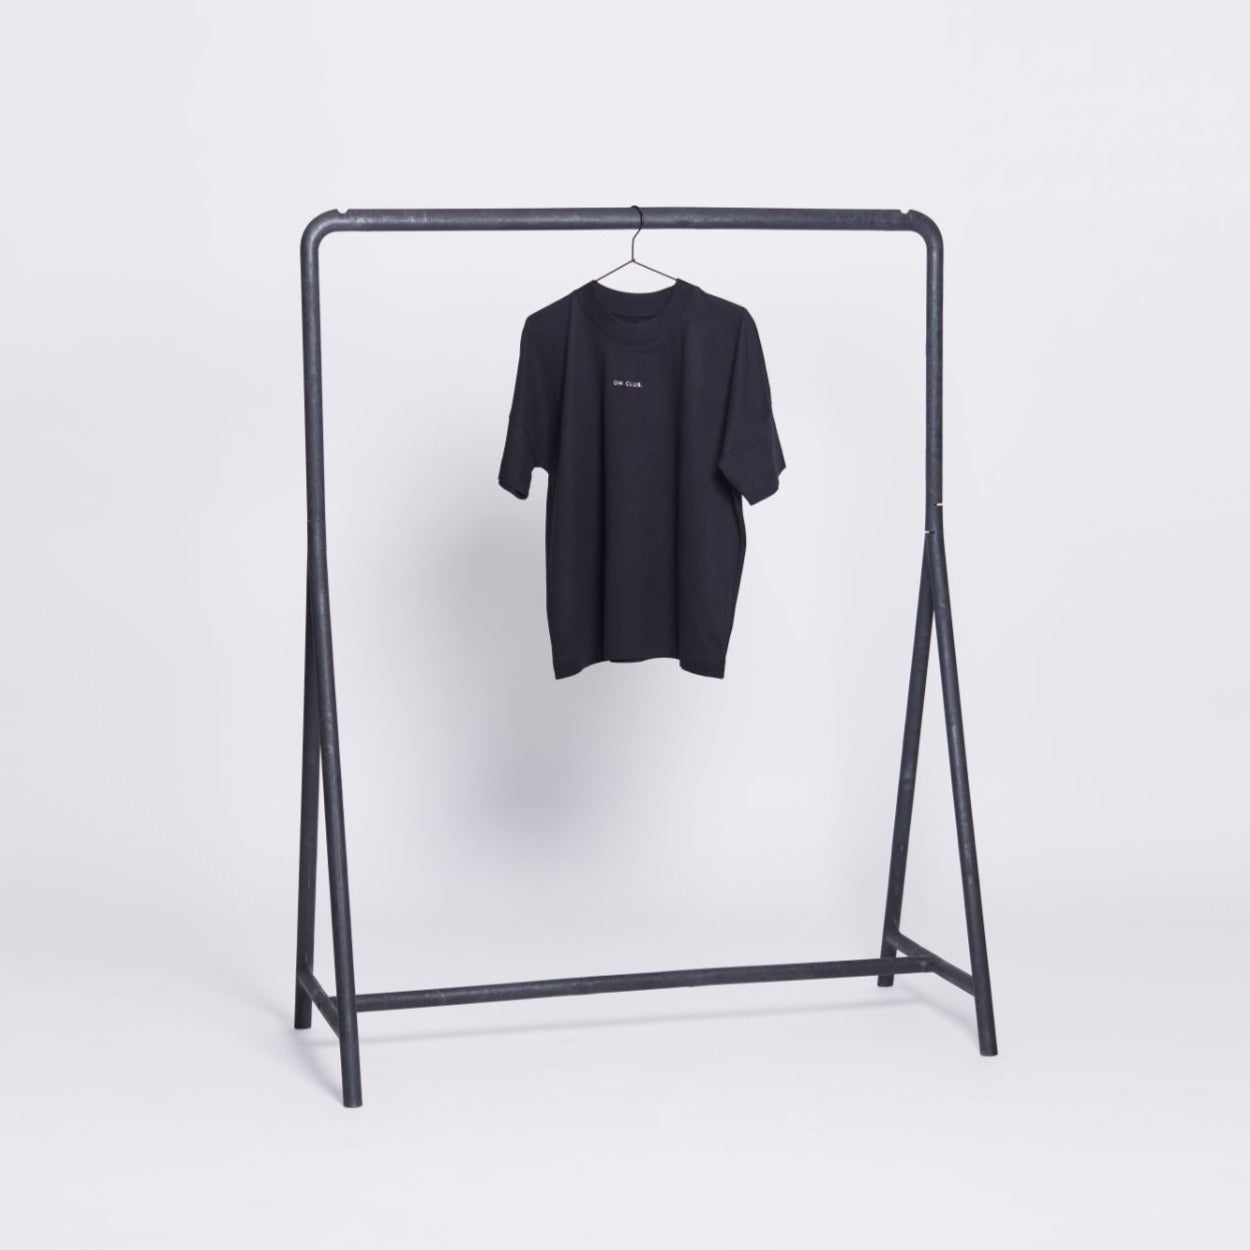 unisex t-shirt „om club“ - black/organic/oversized